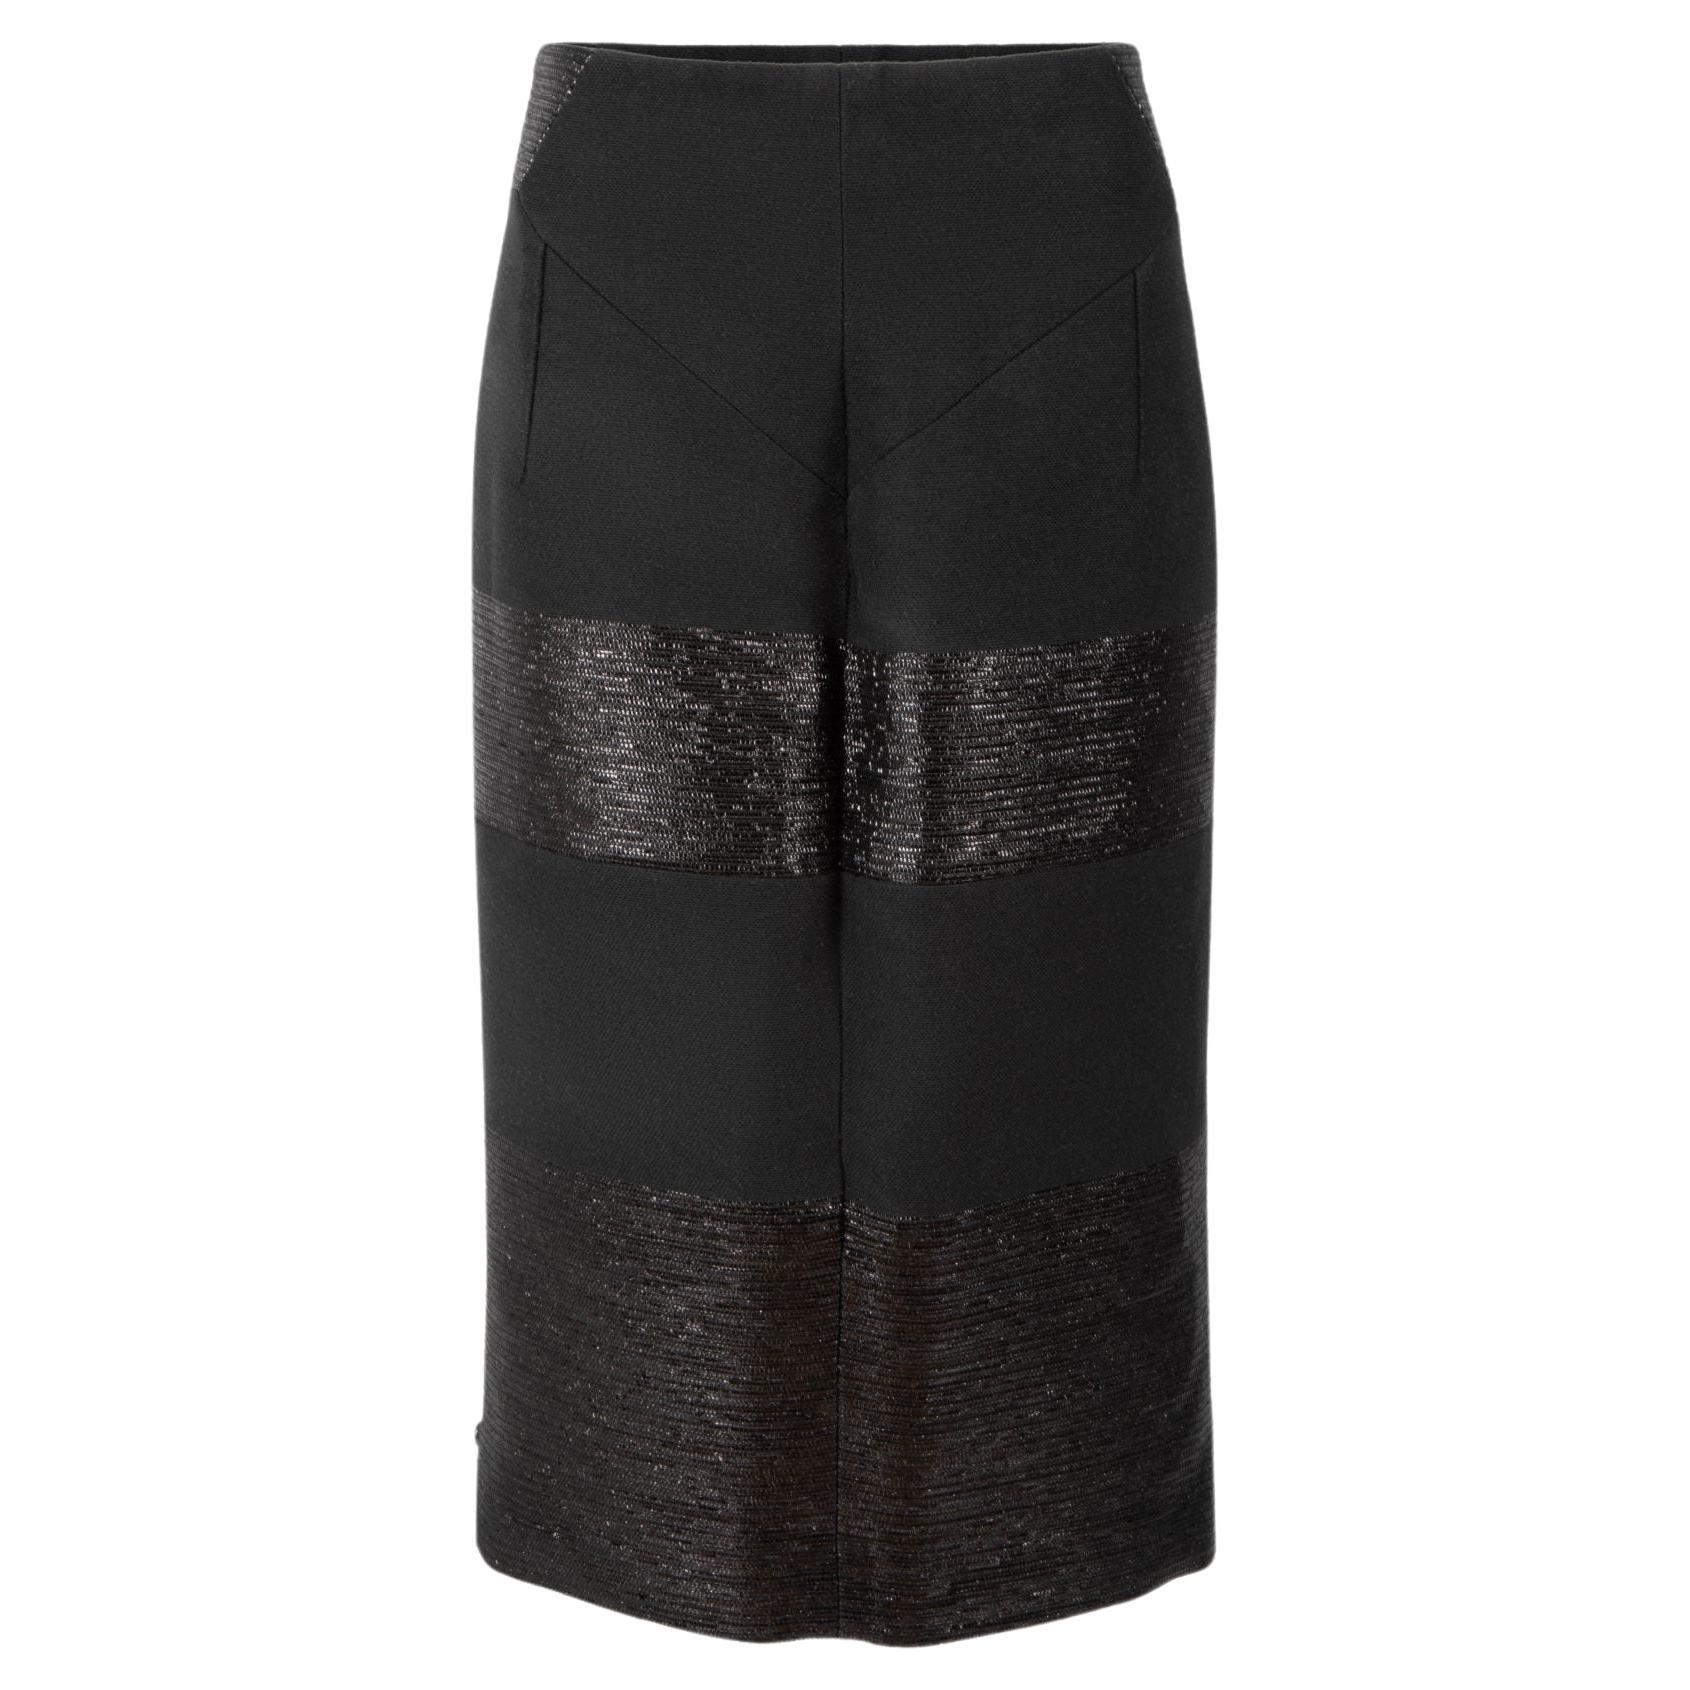 Amanda Wakeley, jupe crayon texturée noire, taille XL en vente